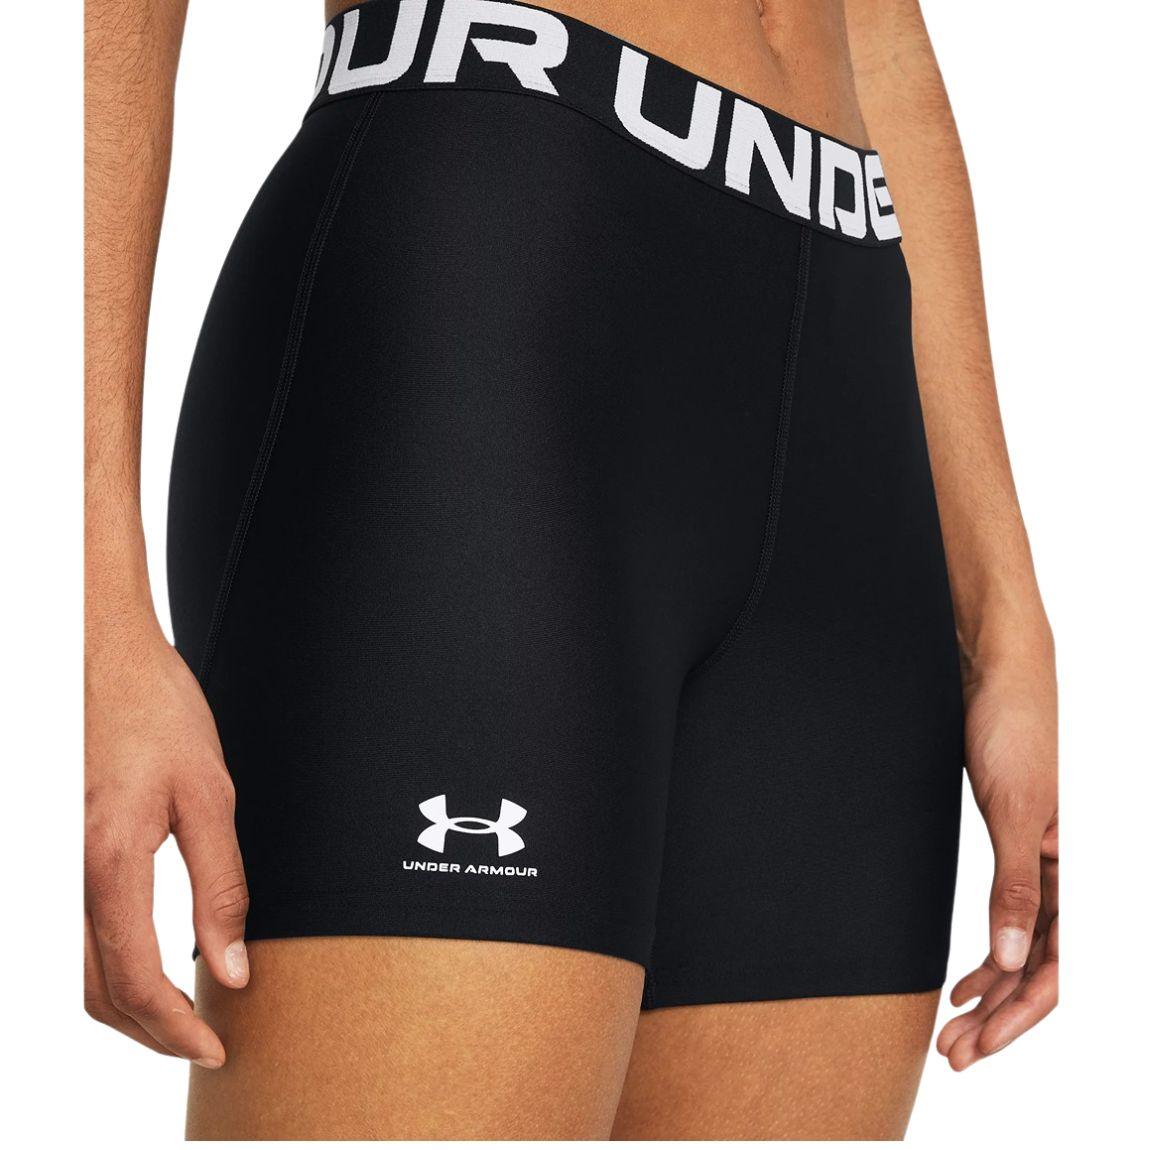 Under Armour HeatGear® Middy Shorts - Women